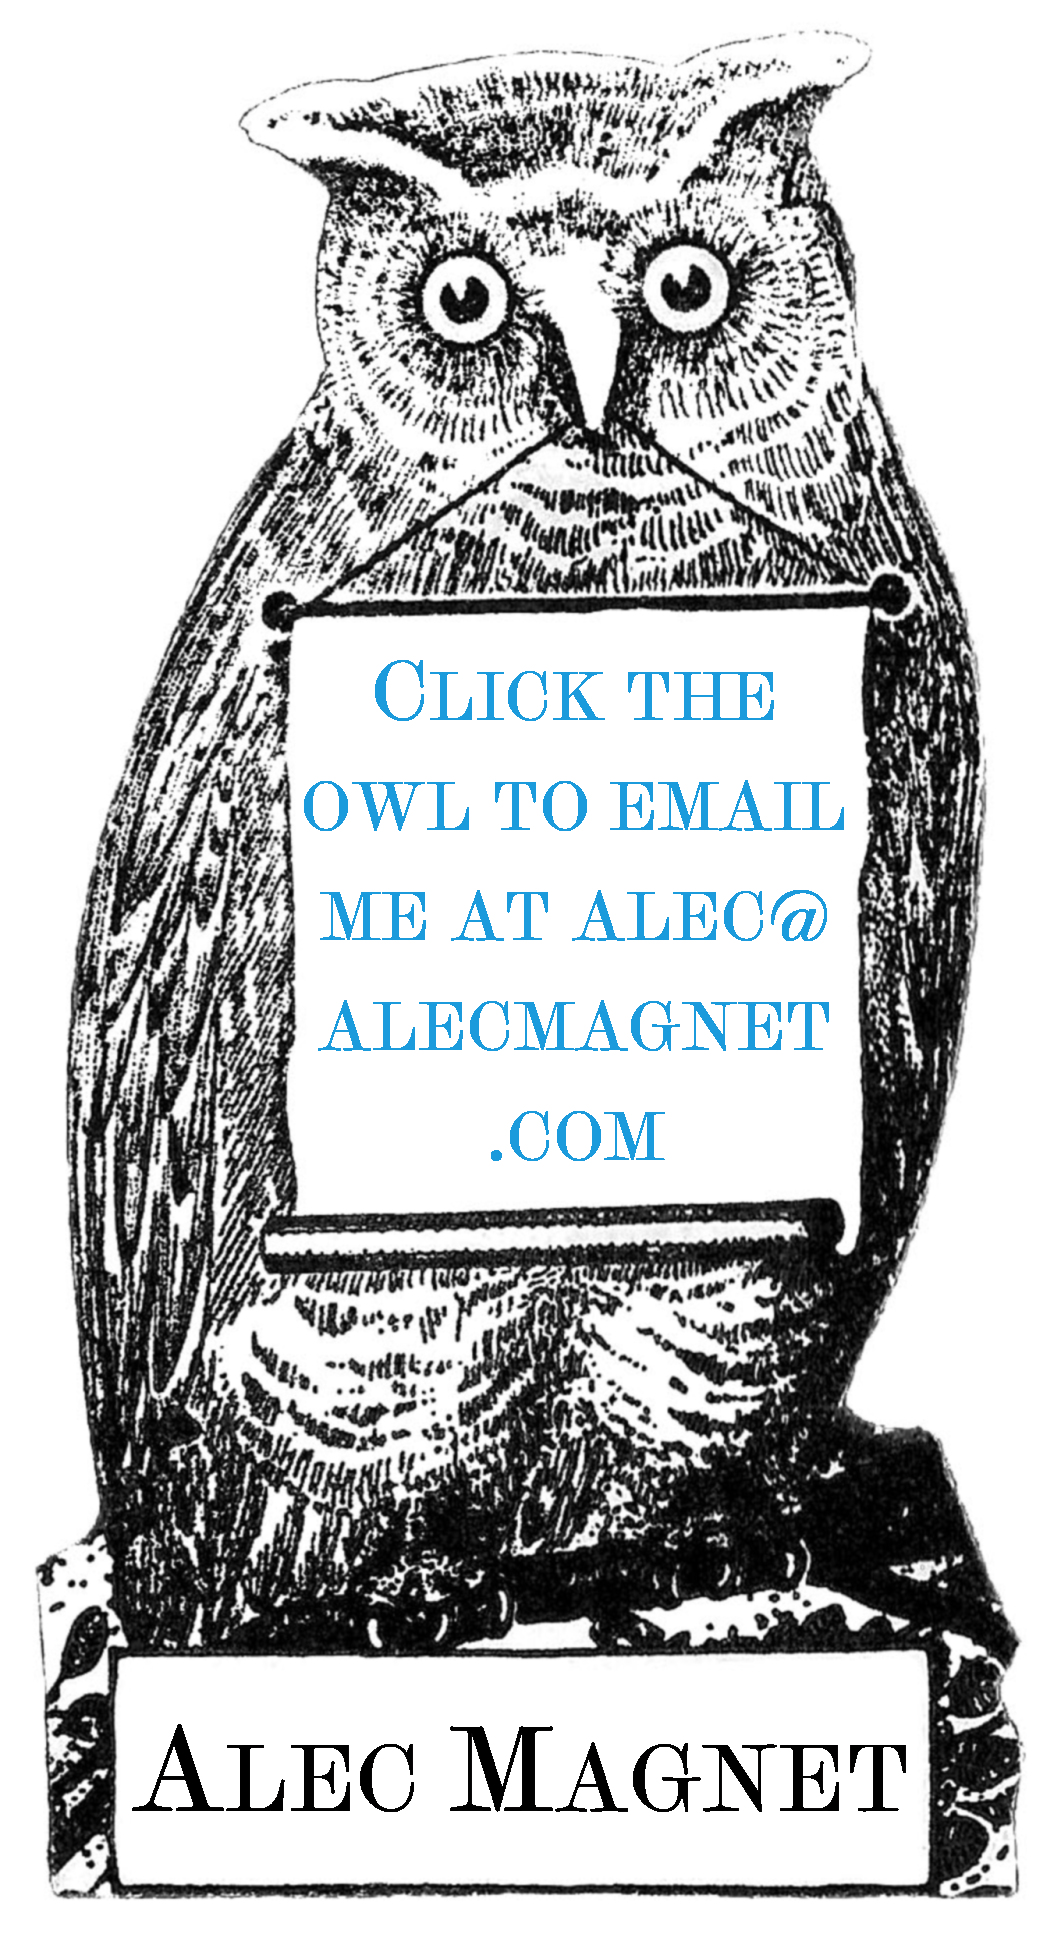 Email me at alec@alecmagnet.com